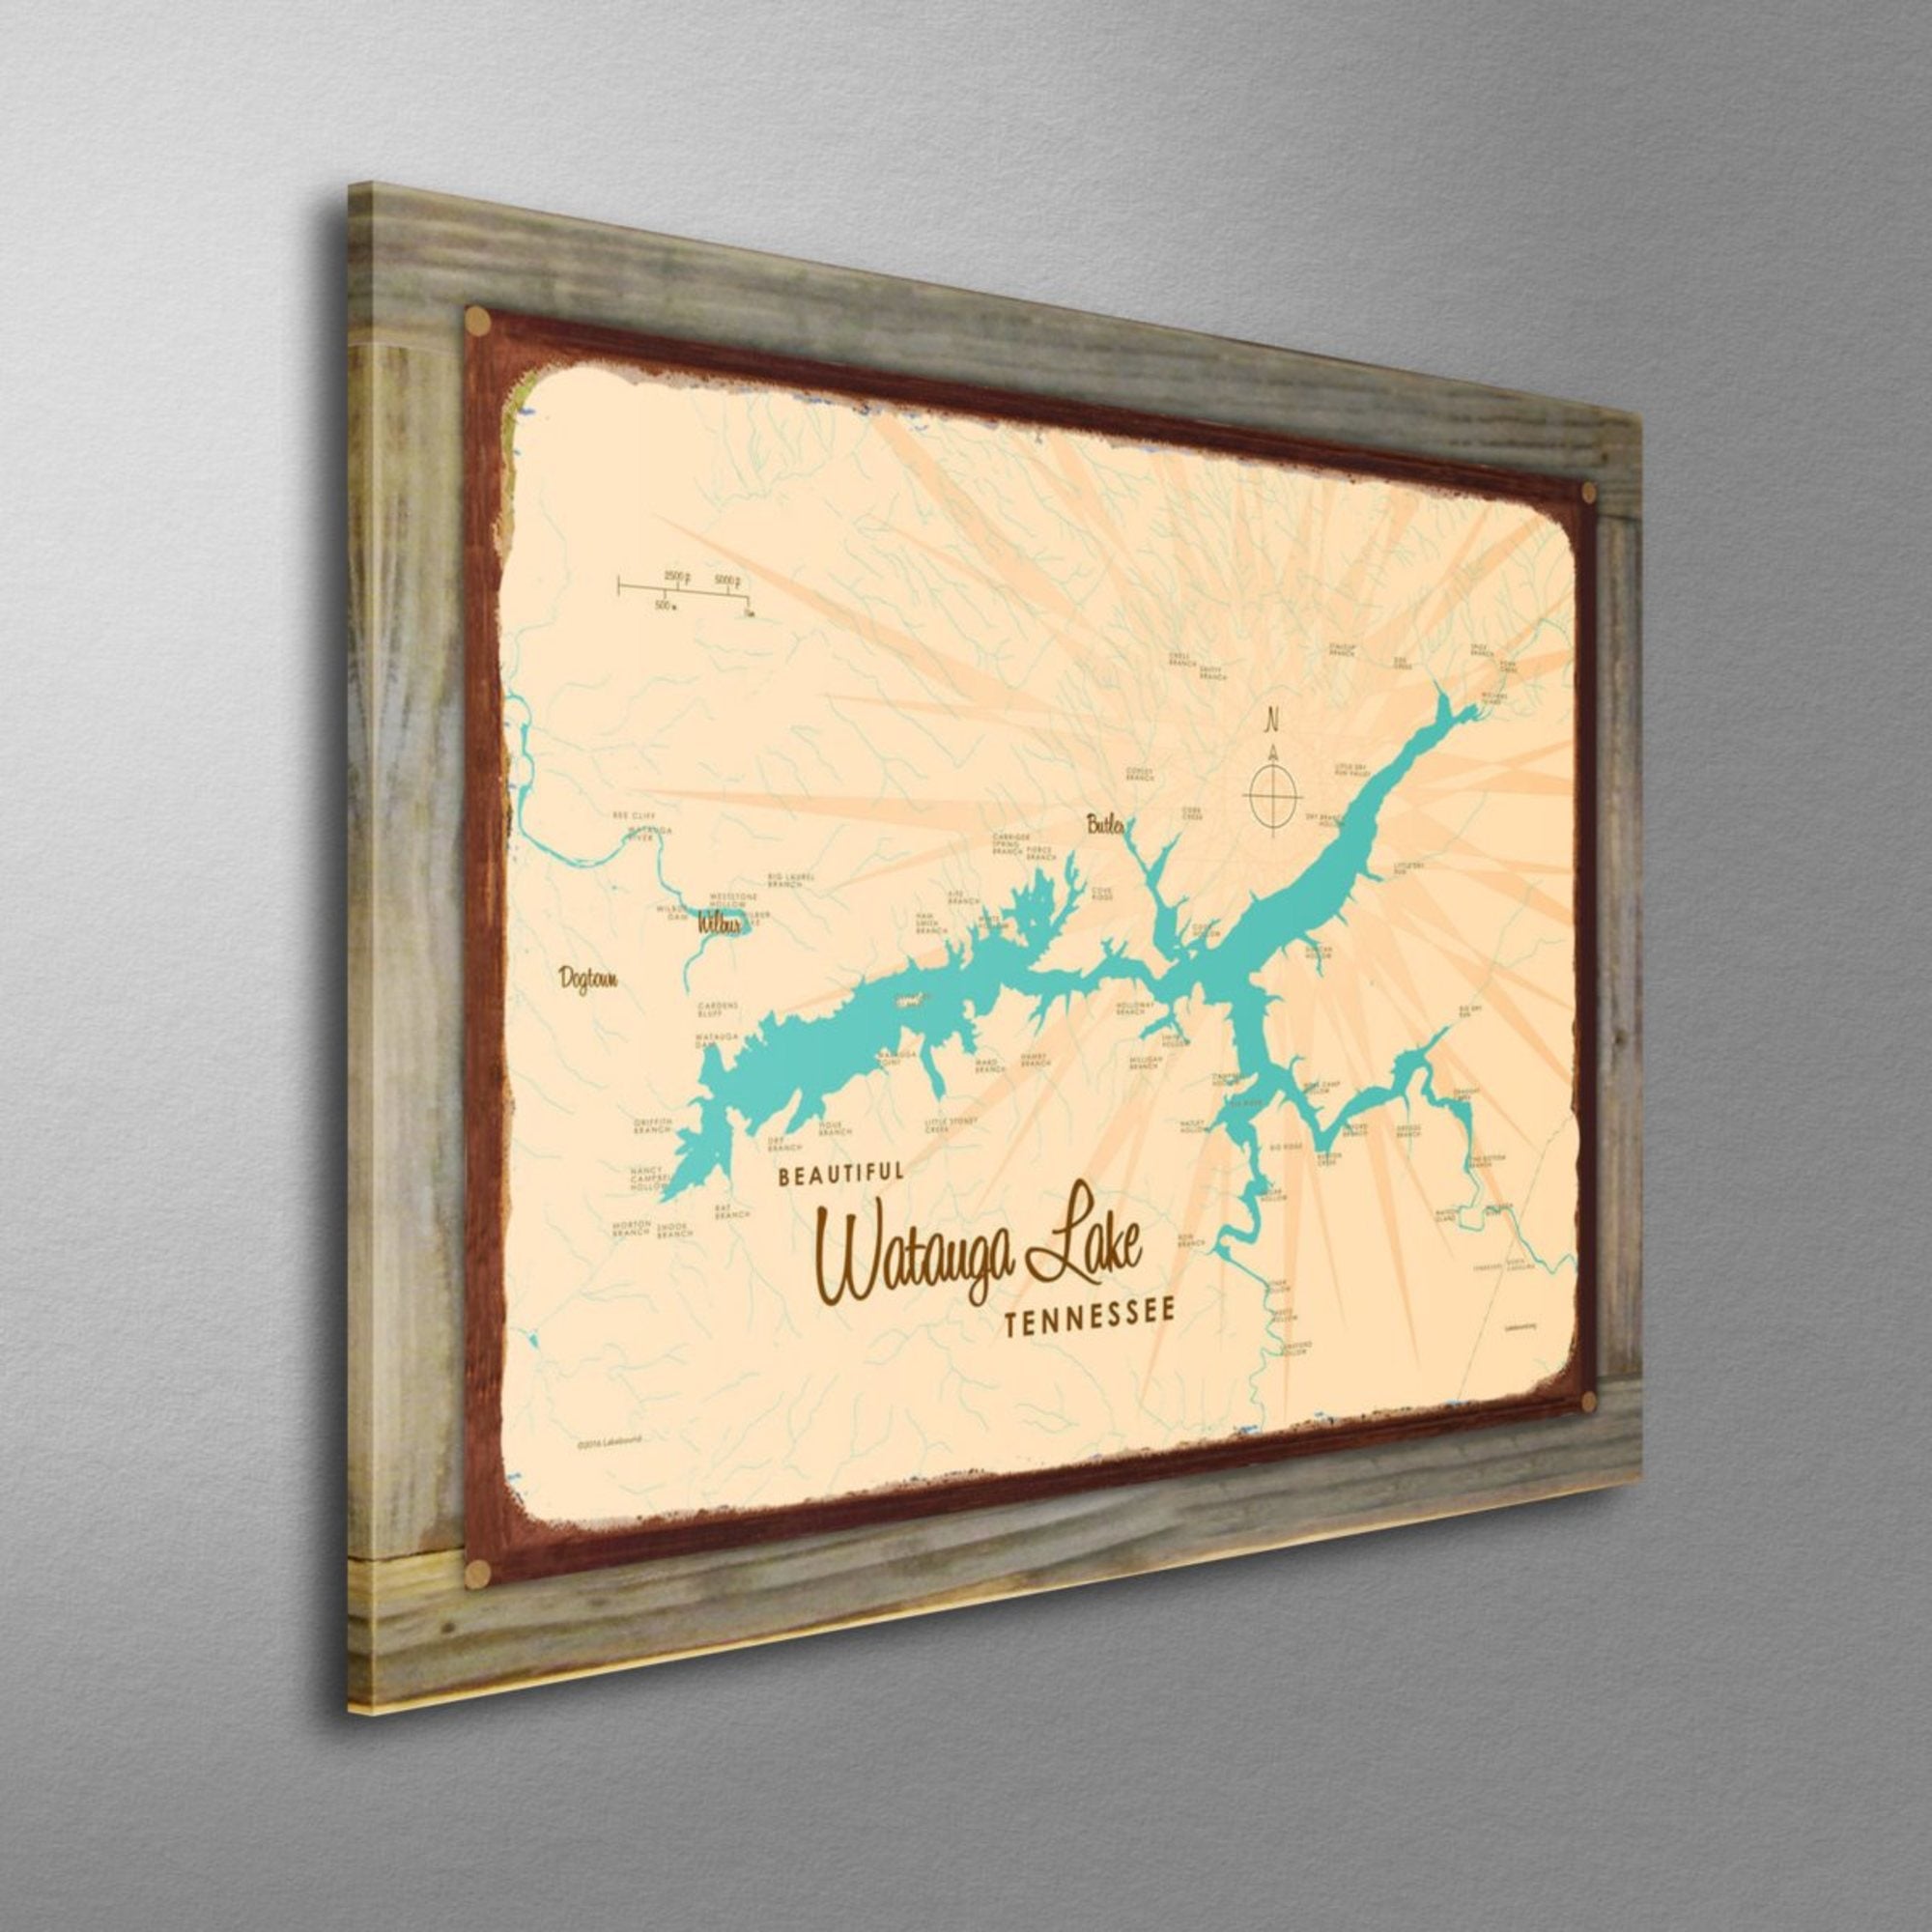 Watauga Lake Tennessee, Wood-Mounted Rustic Metal Sign Map Art